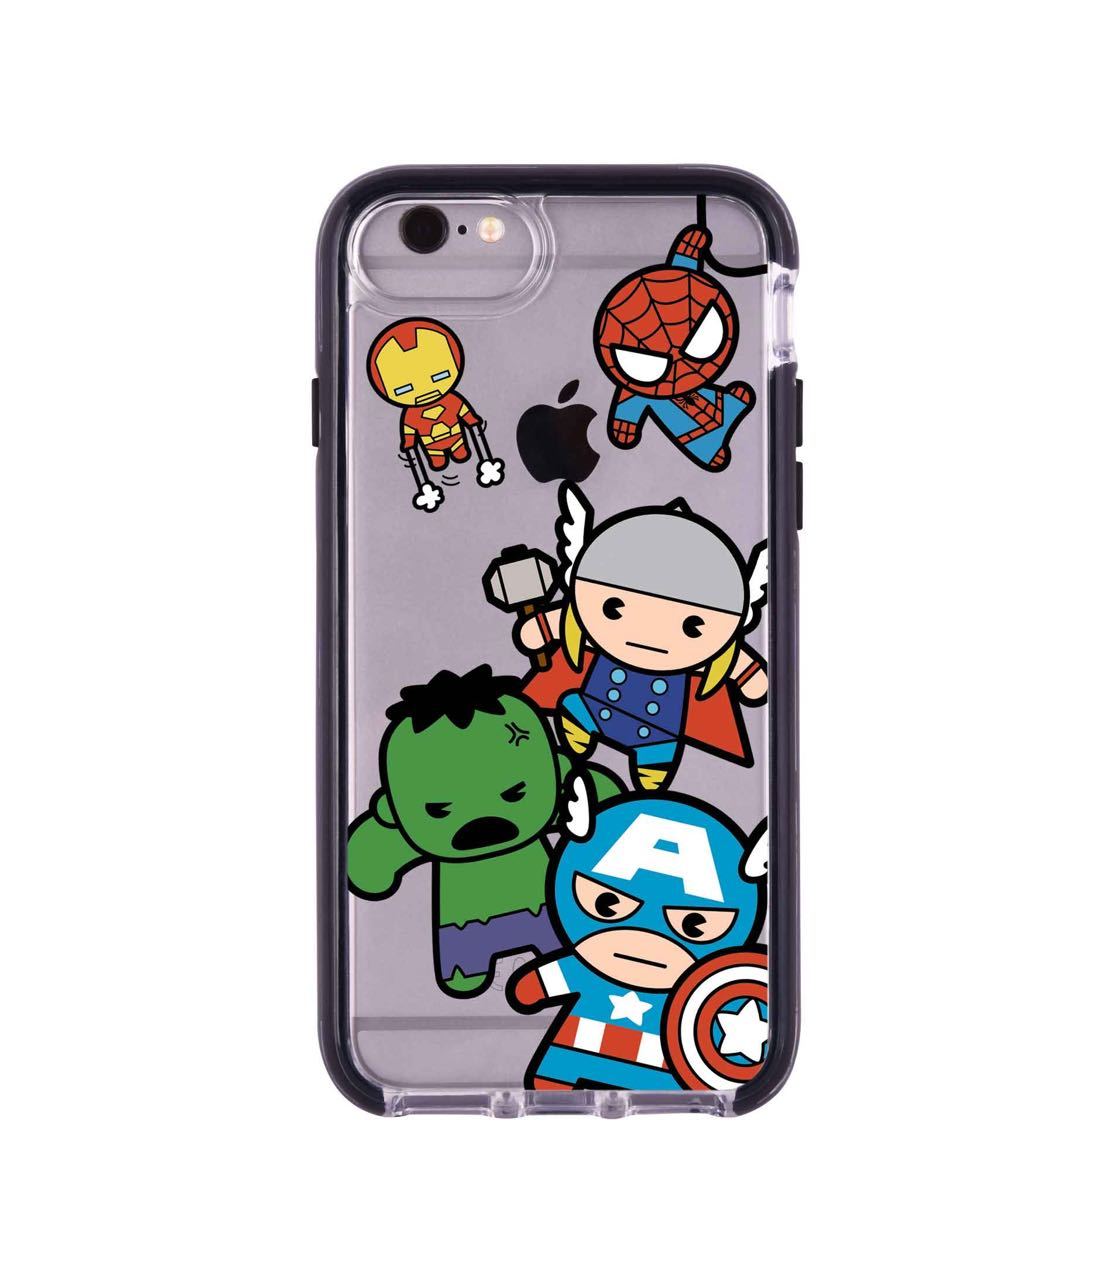 Kawaii Art Marvel Comics - Extreme Phone Case for iPhone 6S